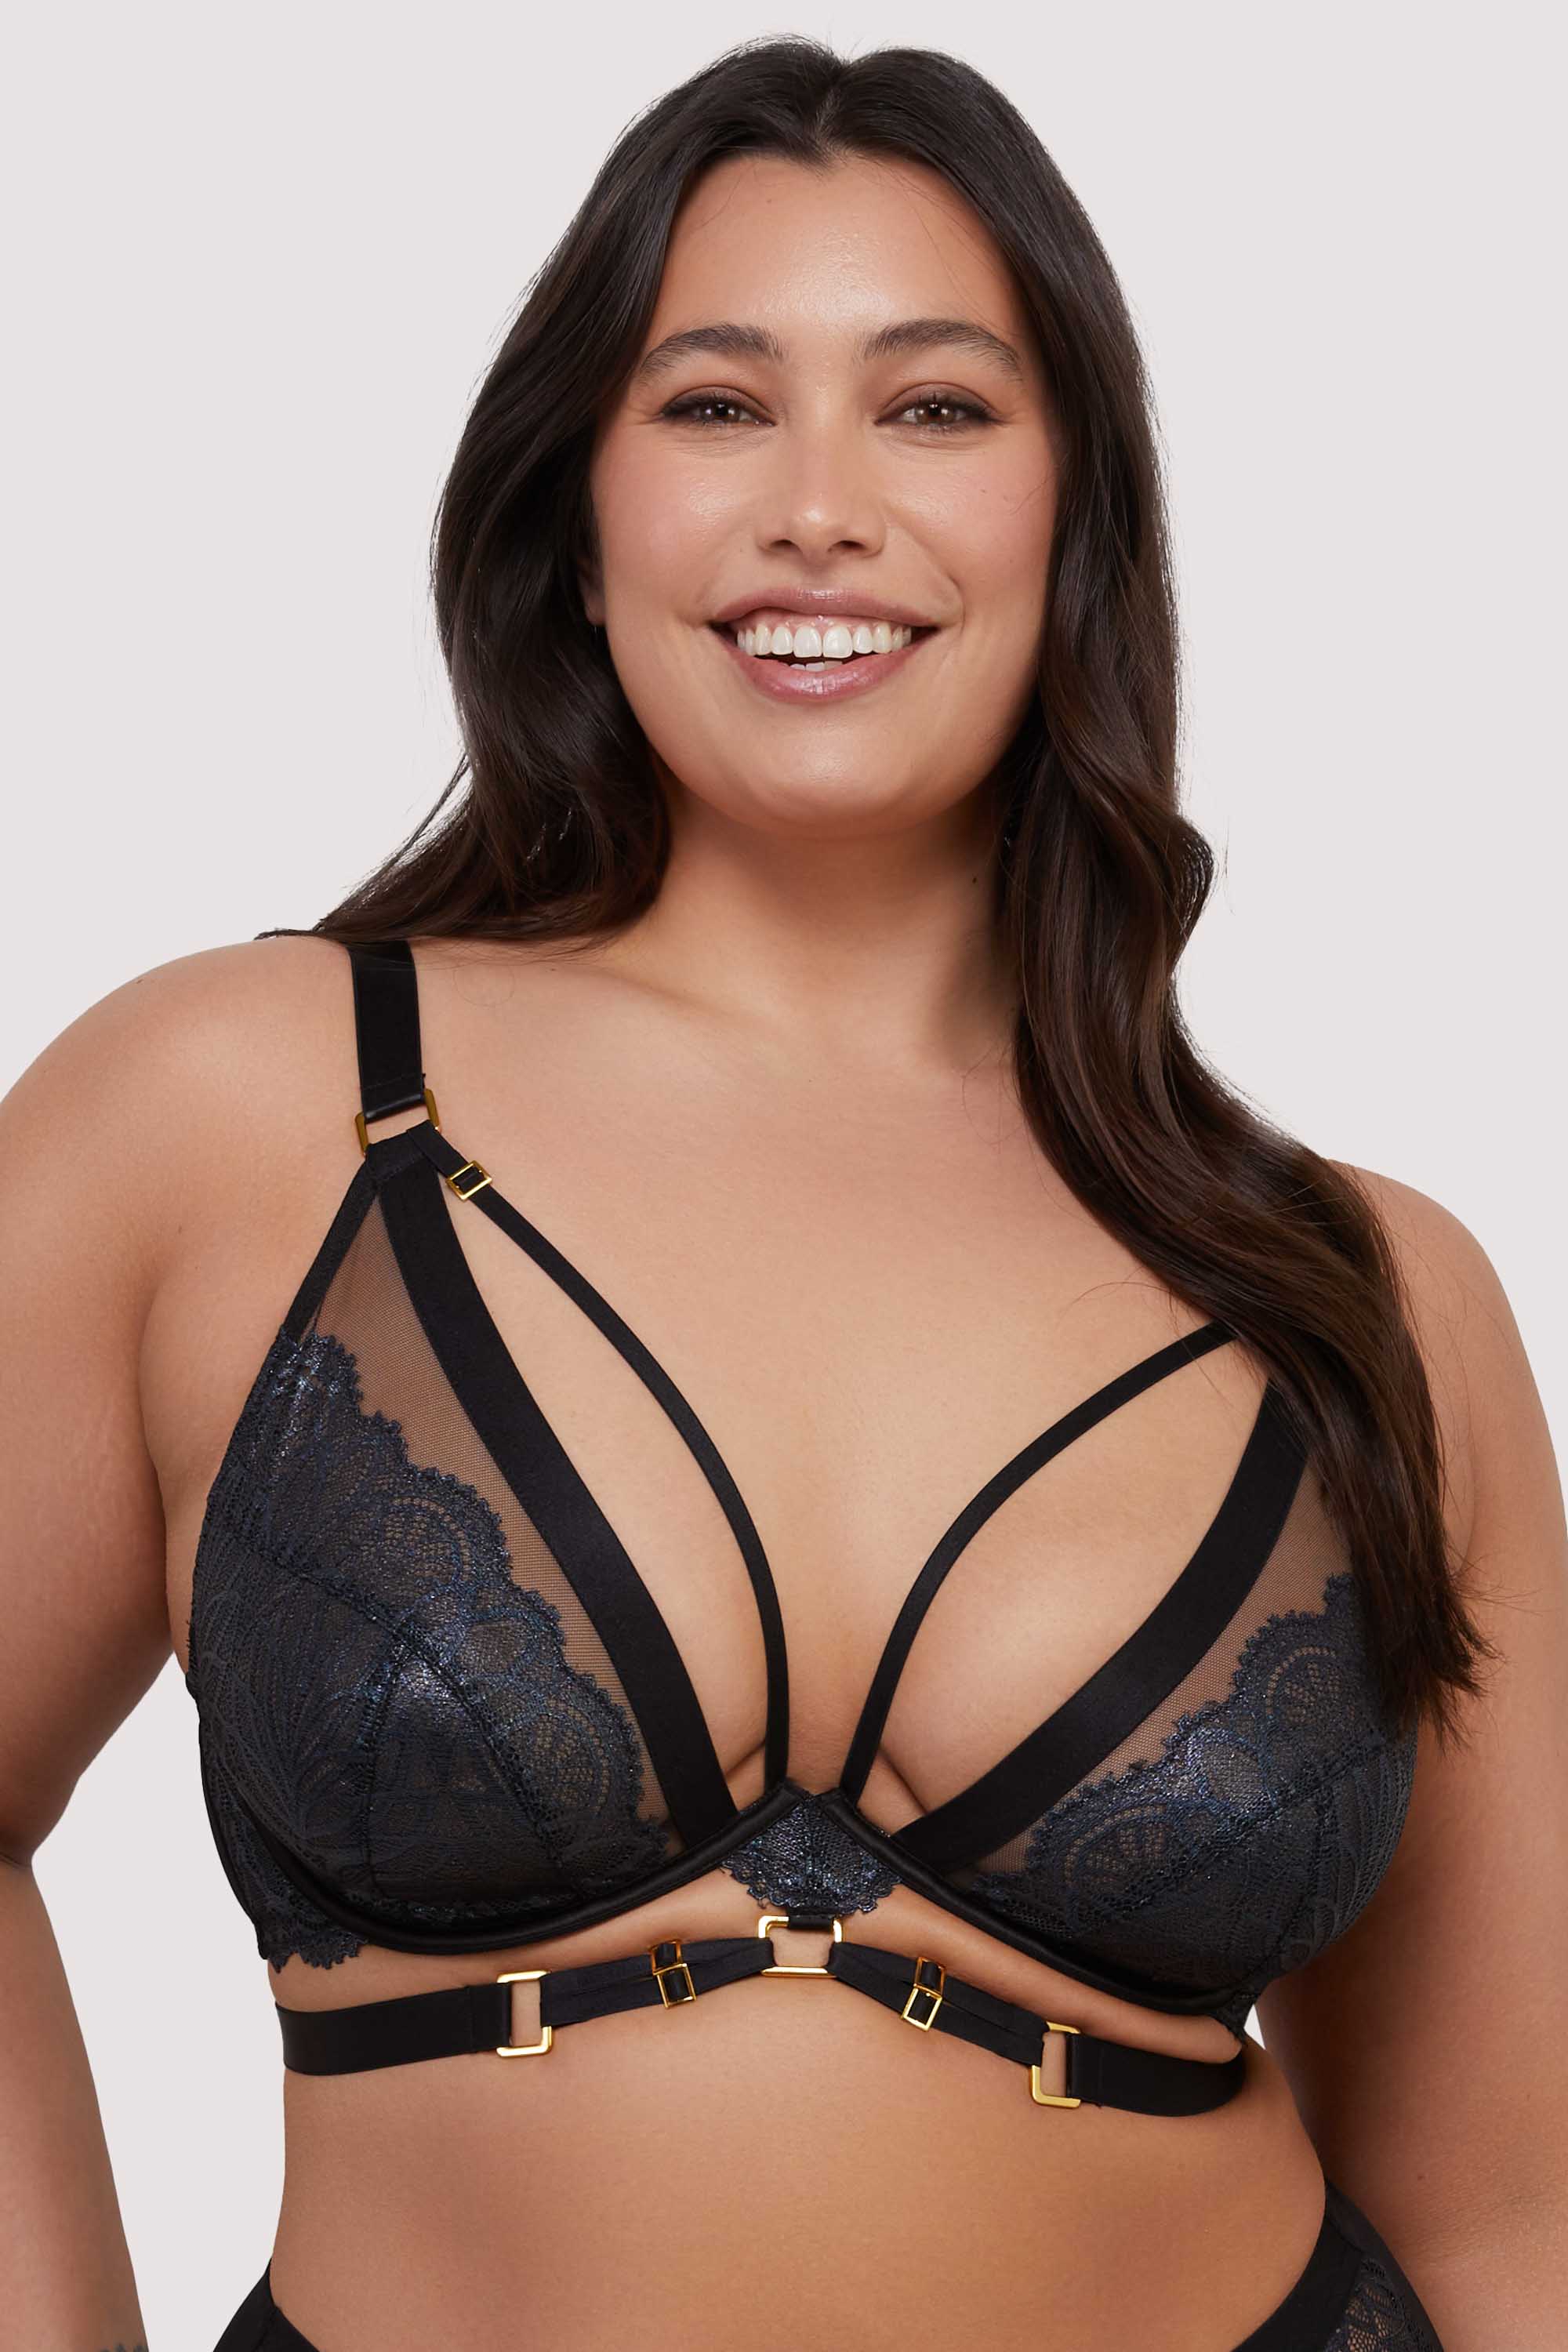 model wears black lace plunge bra with straps